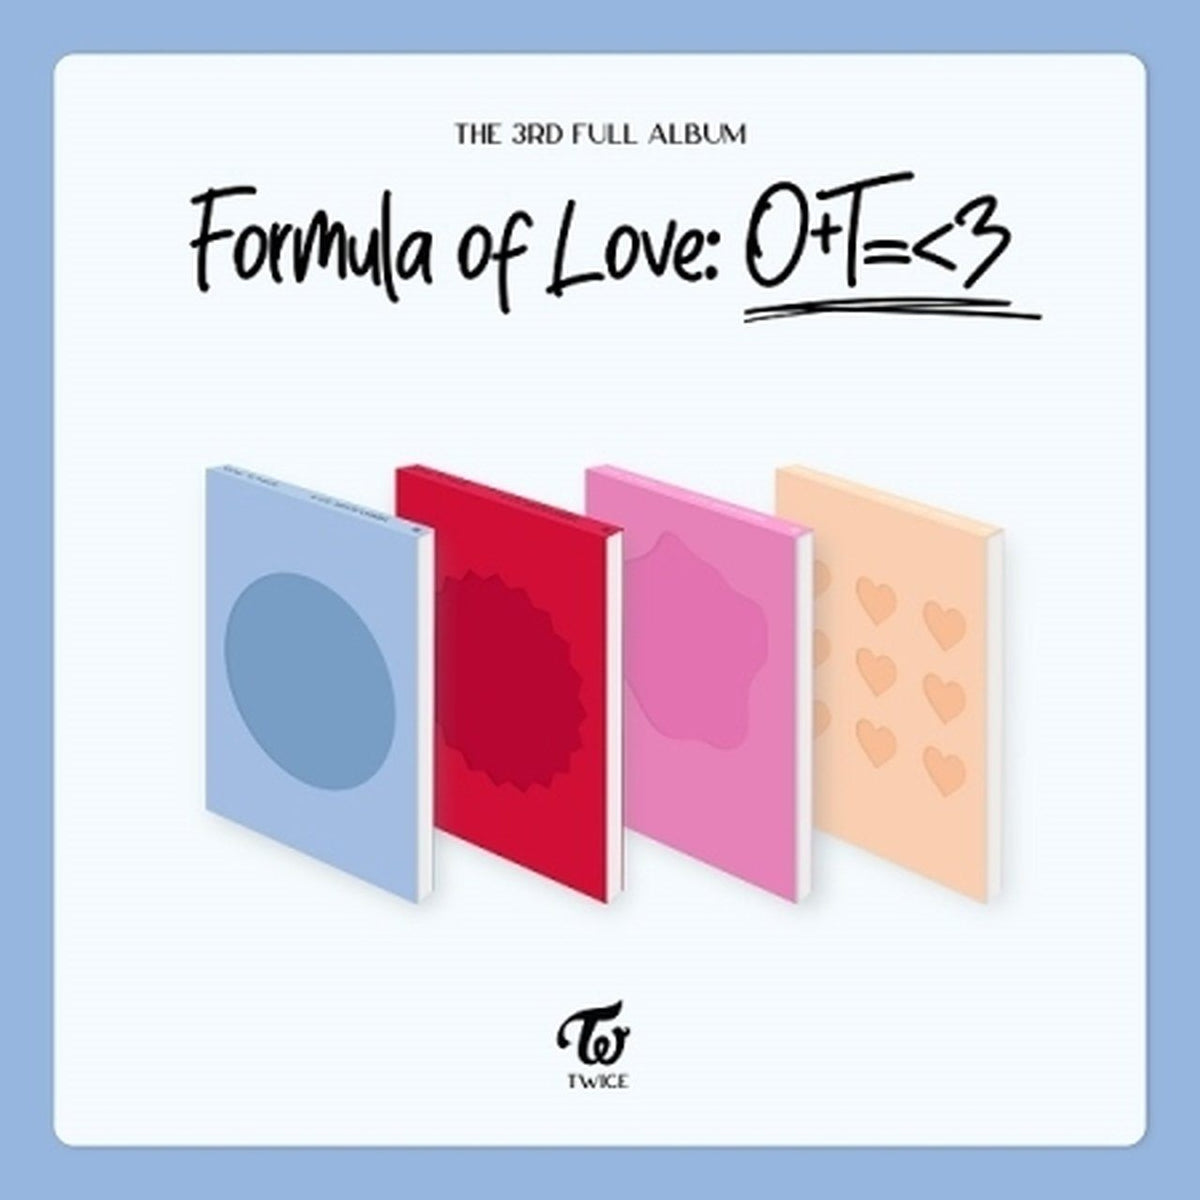 Kpop TWICE Mini Photo Album Formula of Love O+T=3 High quality HD Print  Photo K-pop TWICE